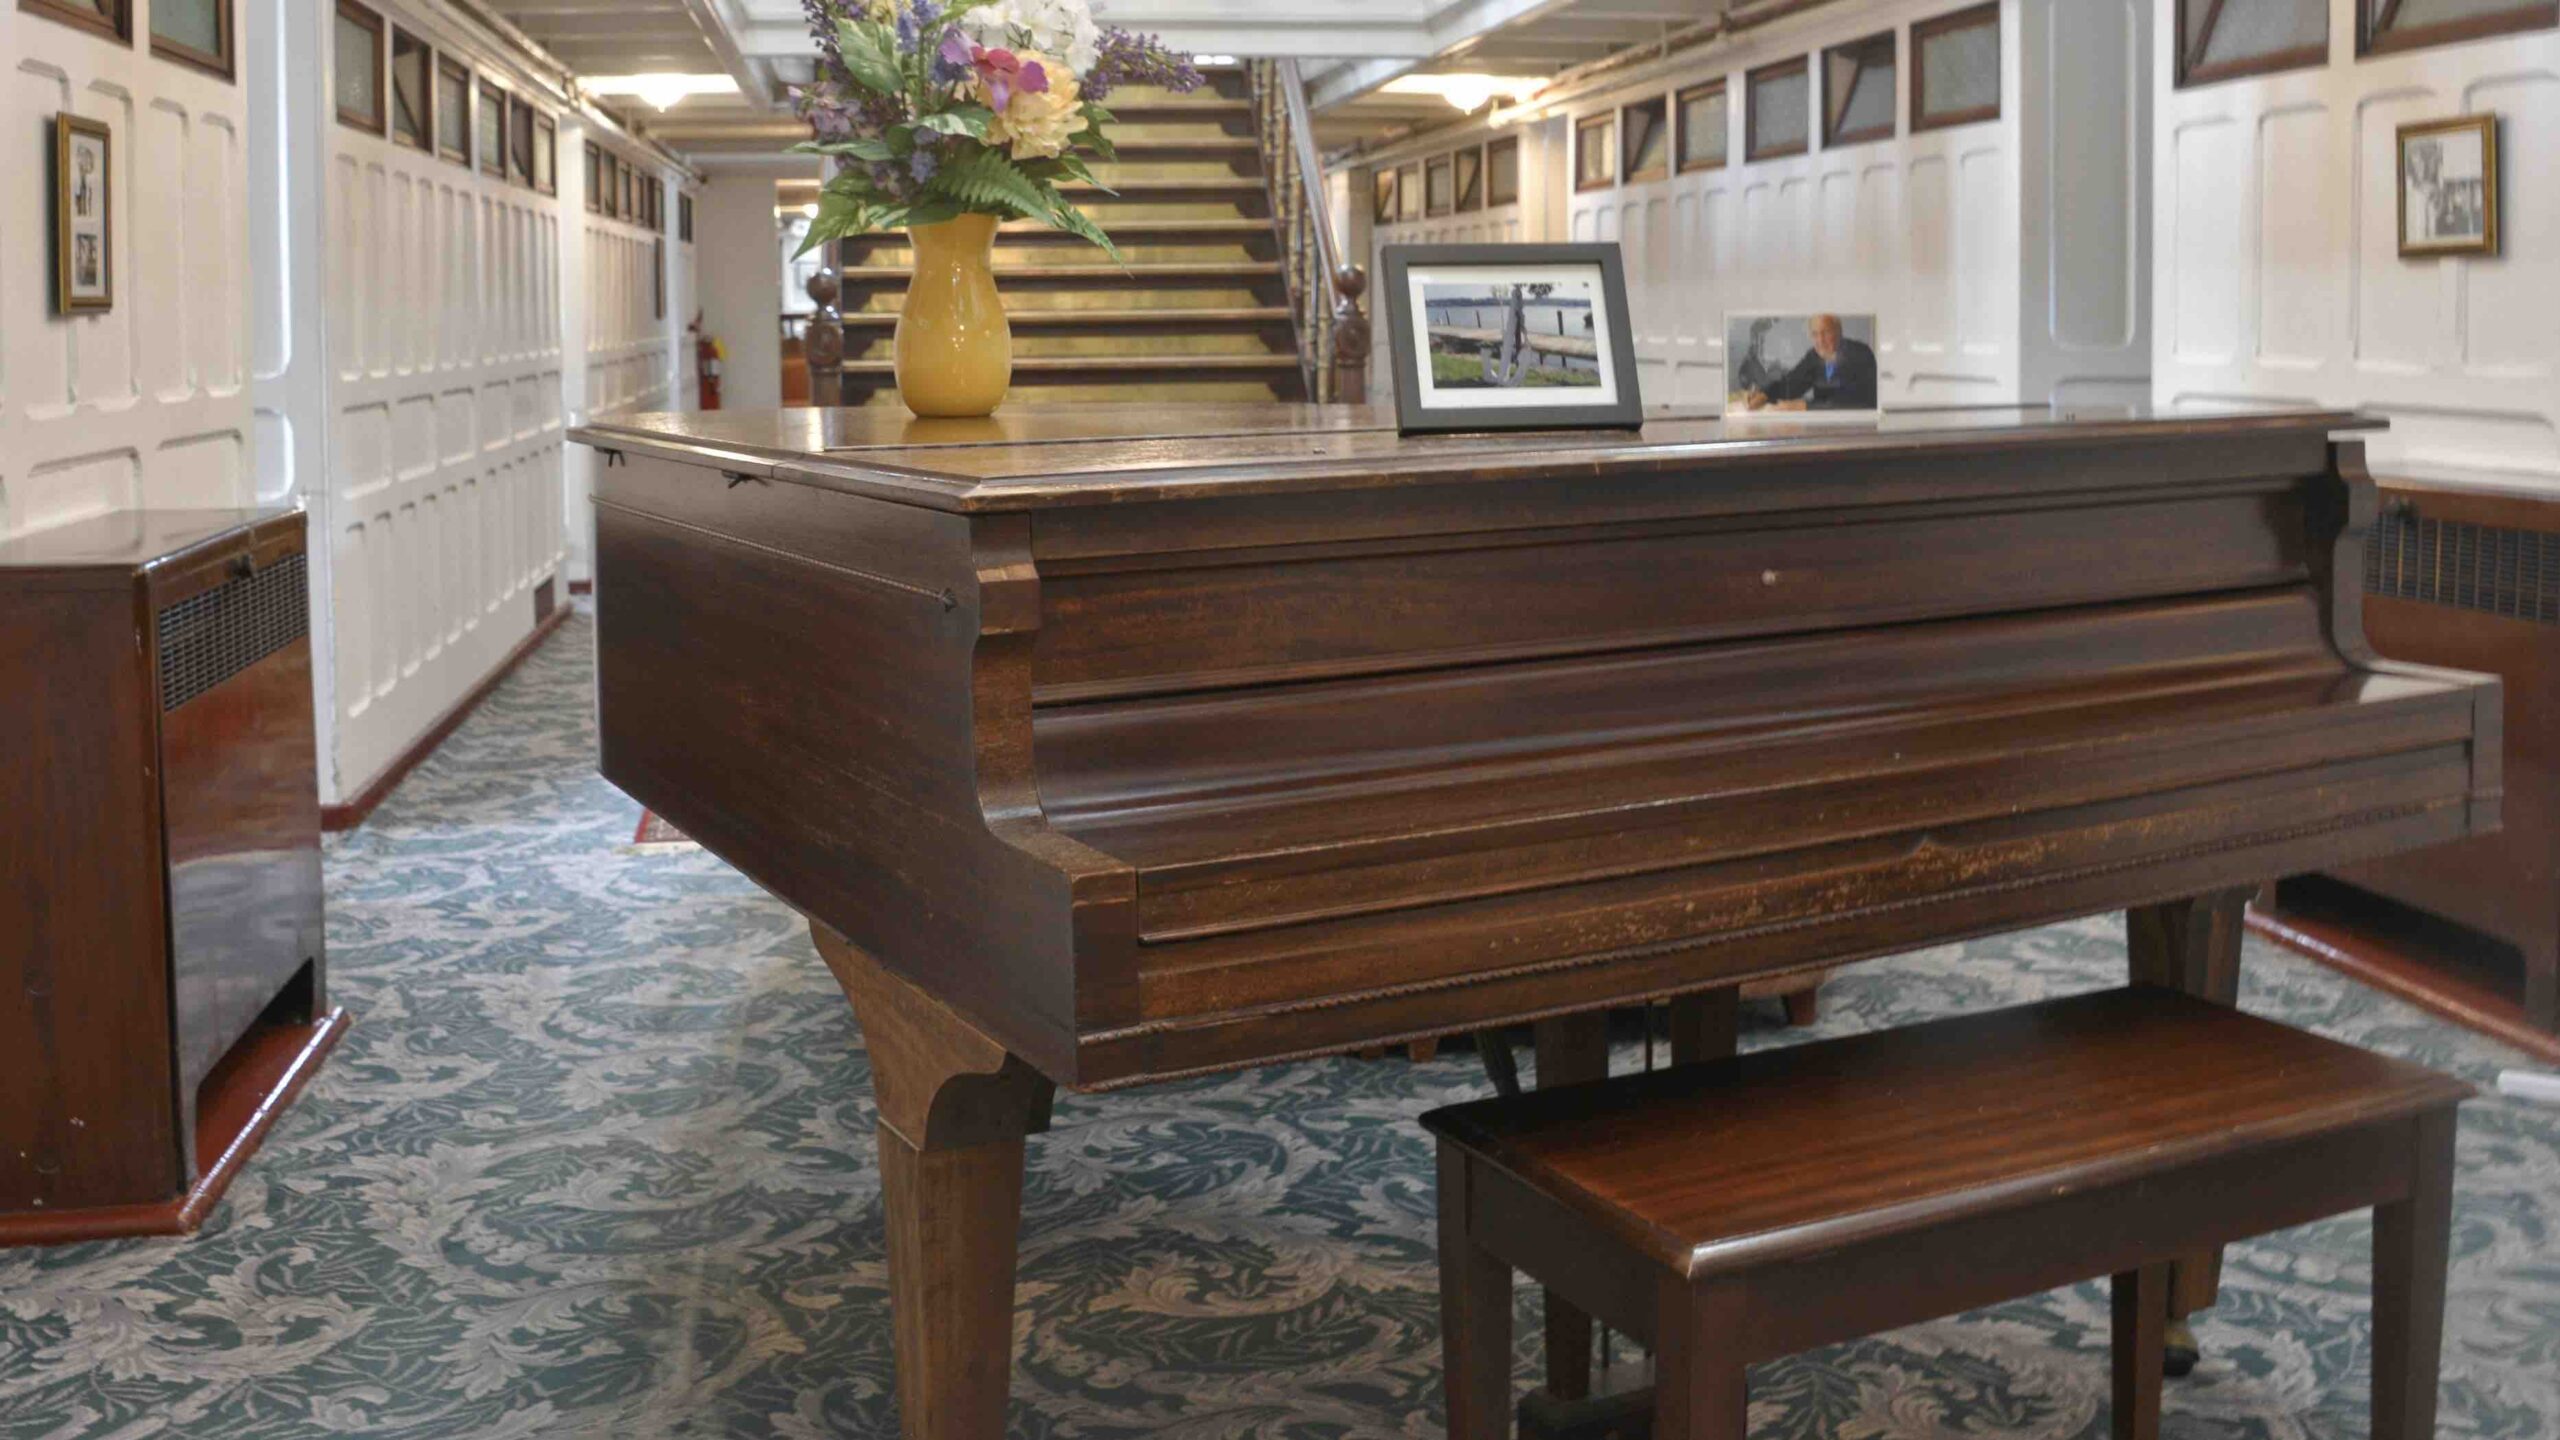 SS Keewatin's passenger lobby with piano